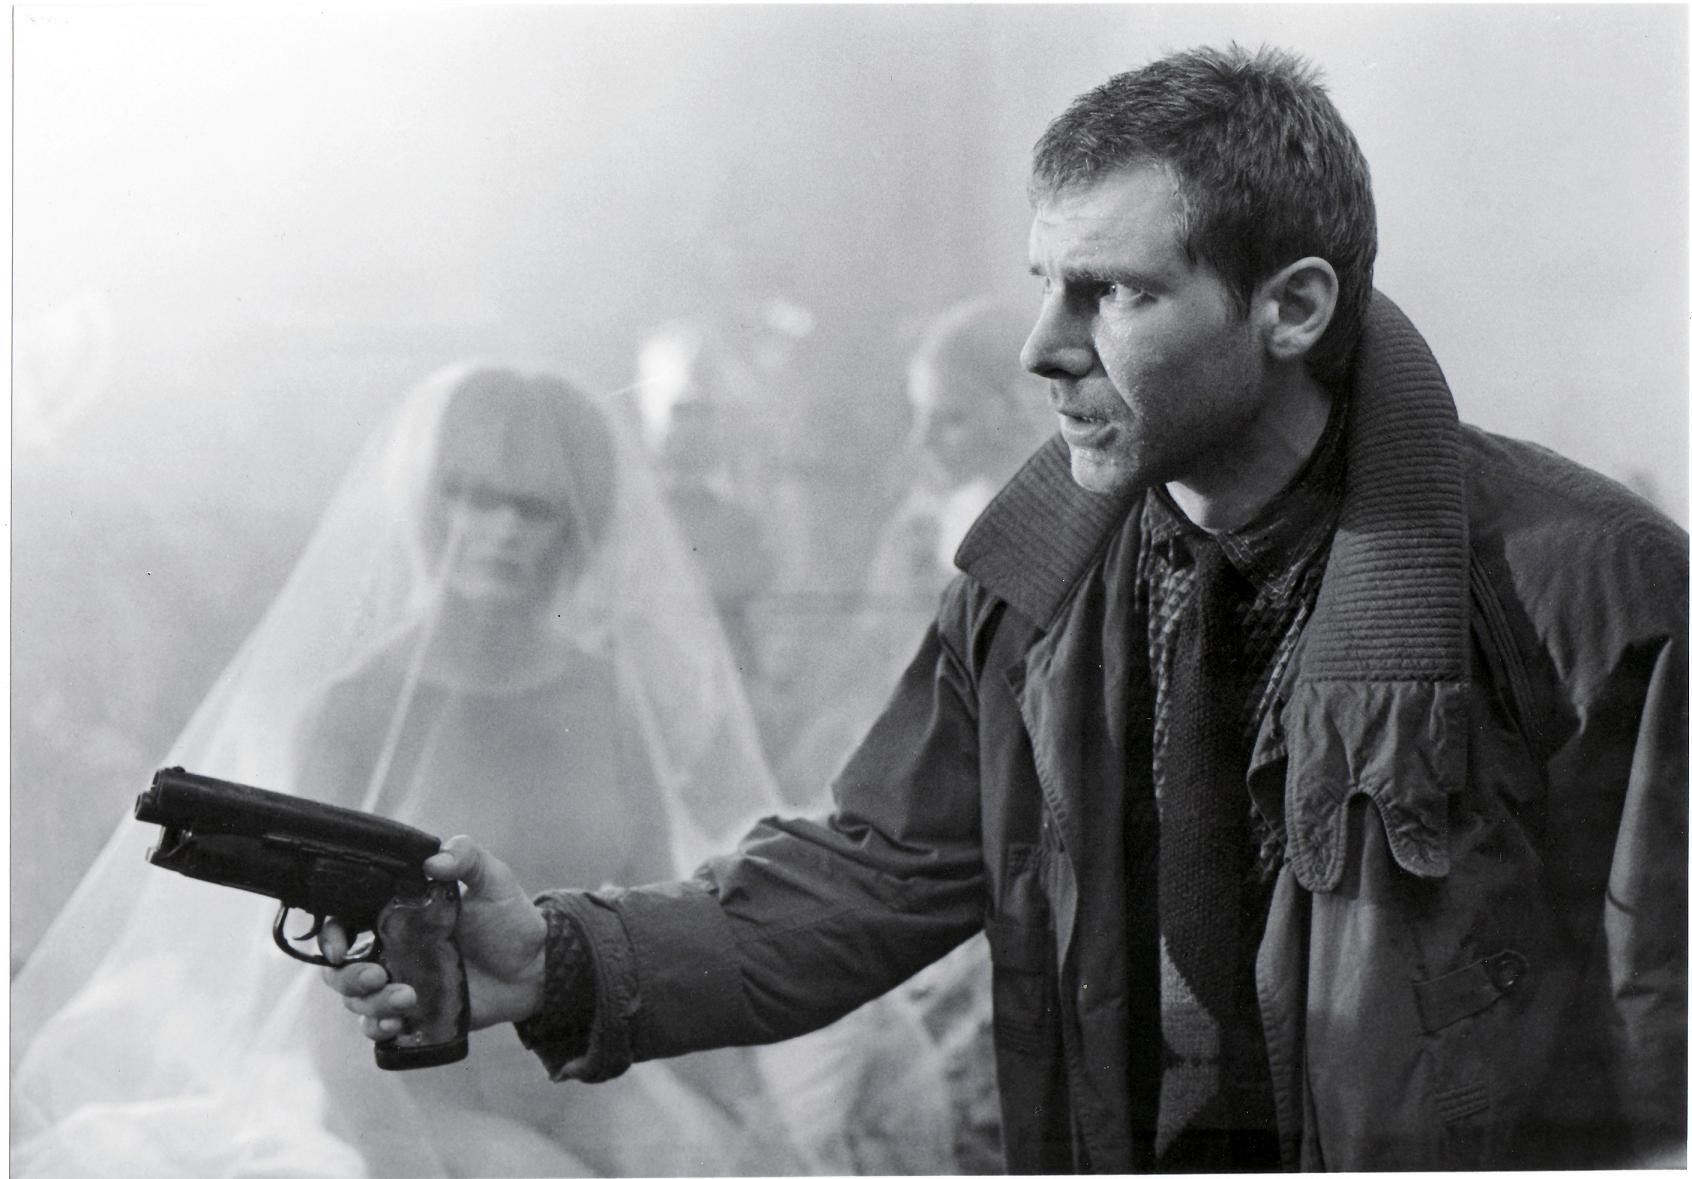 People 1692x1179 Harrison Ford Rick Deckard Blade Runner monochrome movies gun weapon science fiction Science Fiction Men men